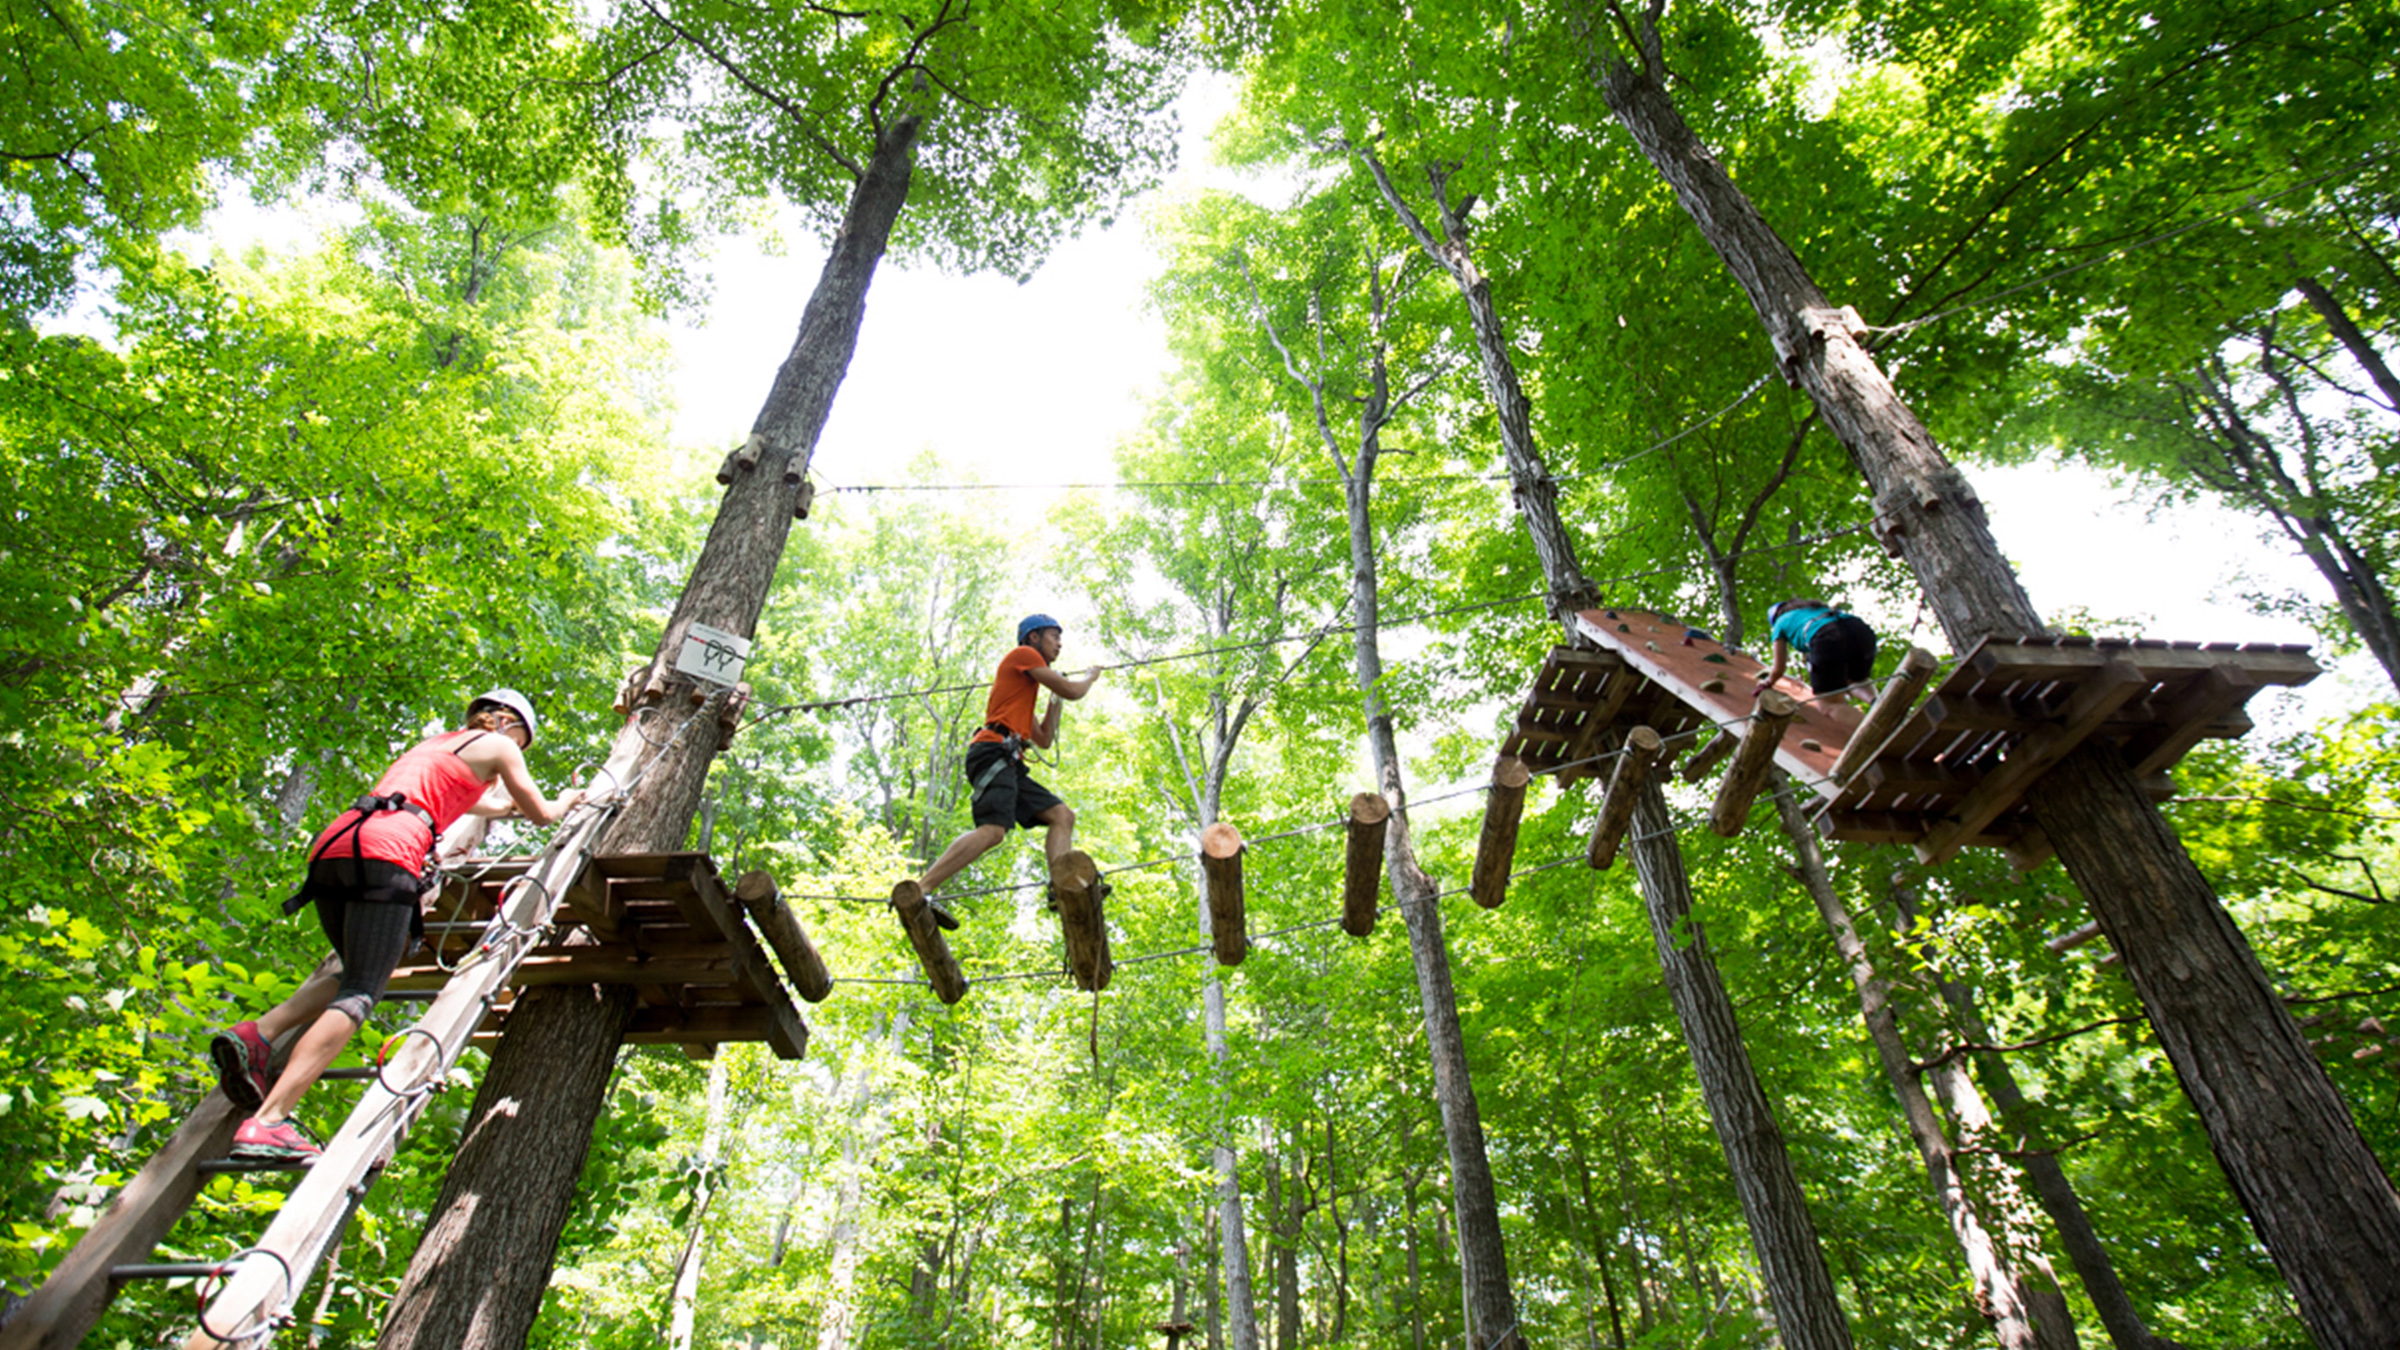 Treetop Trekking at Horseshoe Resort, Barrie Ontario